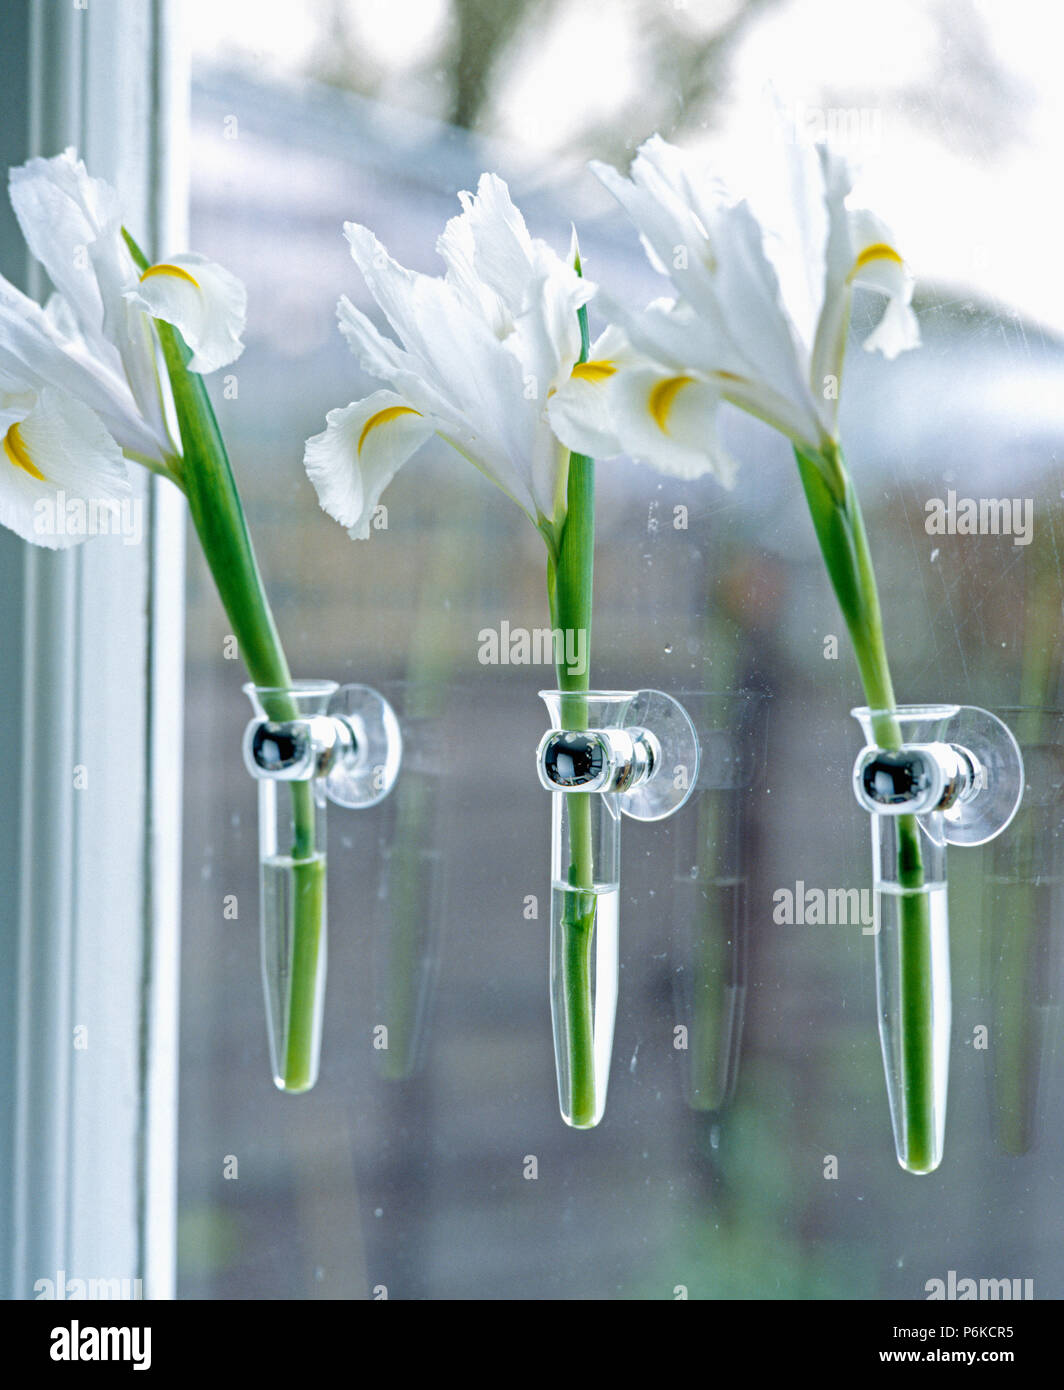 https://c8.alamy.com/comp/P6KCR5/close-up-of-three-irises-in-window-suction-cup-vases-P6KCR5.jpg